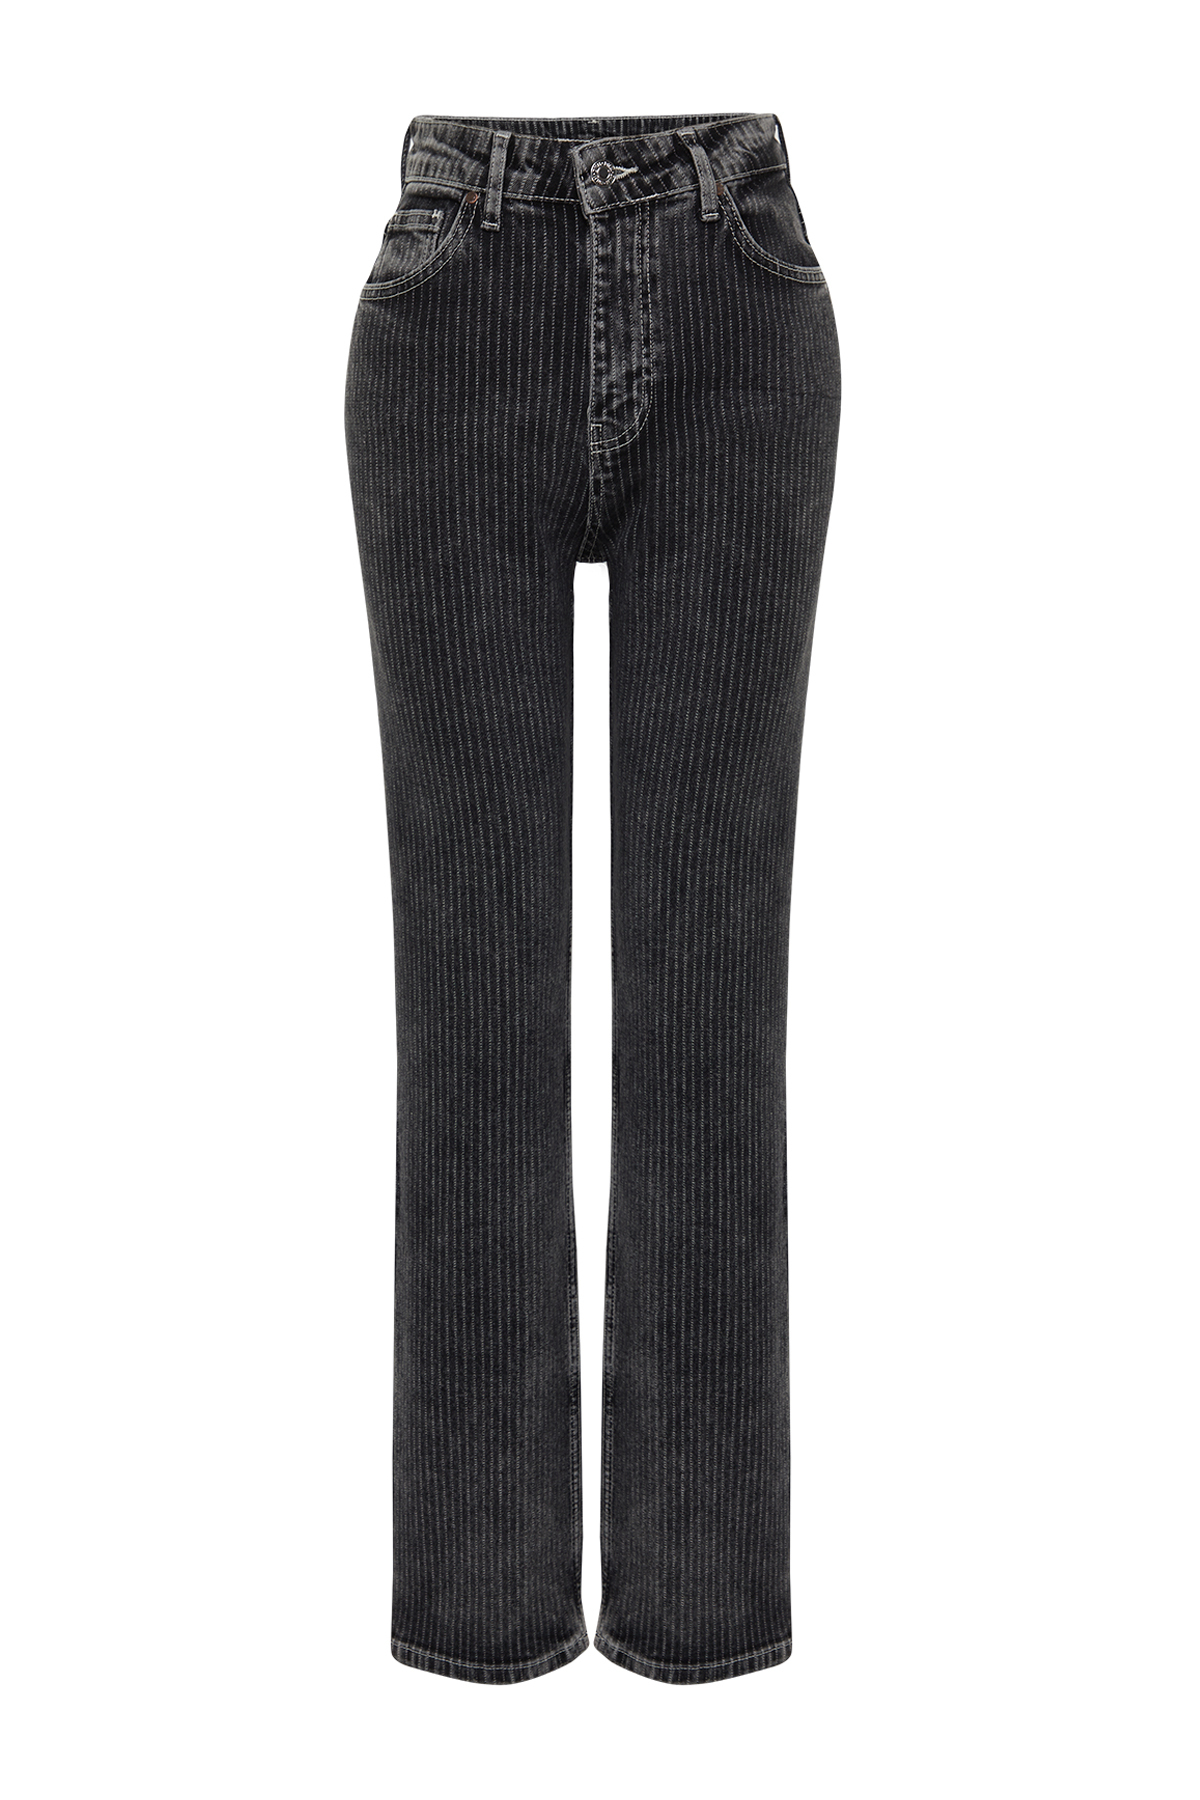 Trendyol Black Striped High Waist Long Straight Jeans